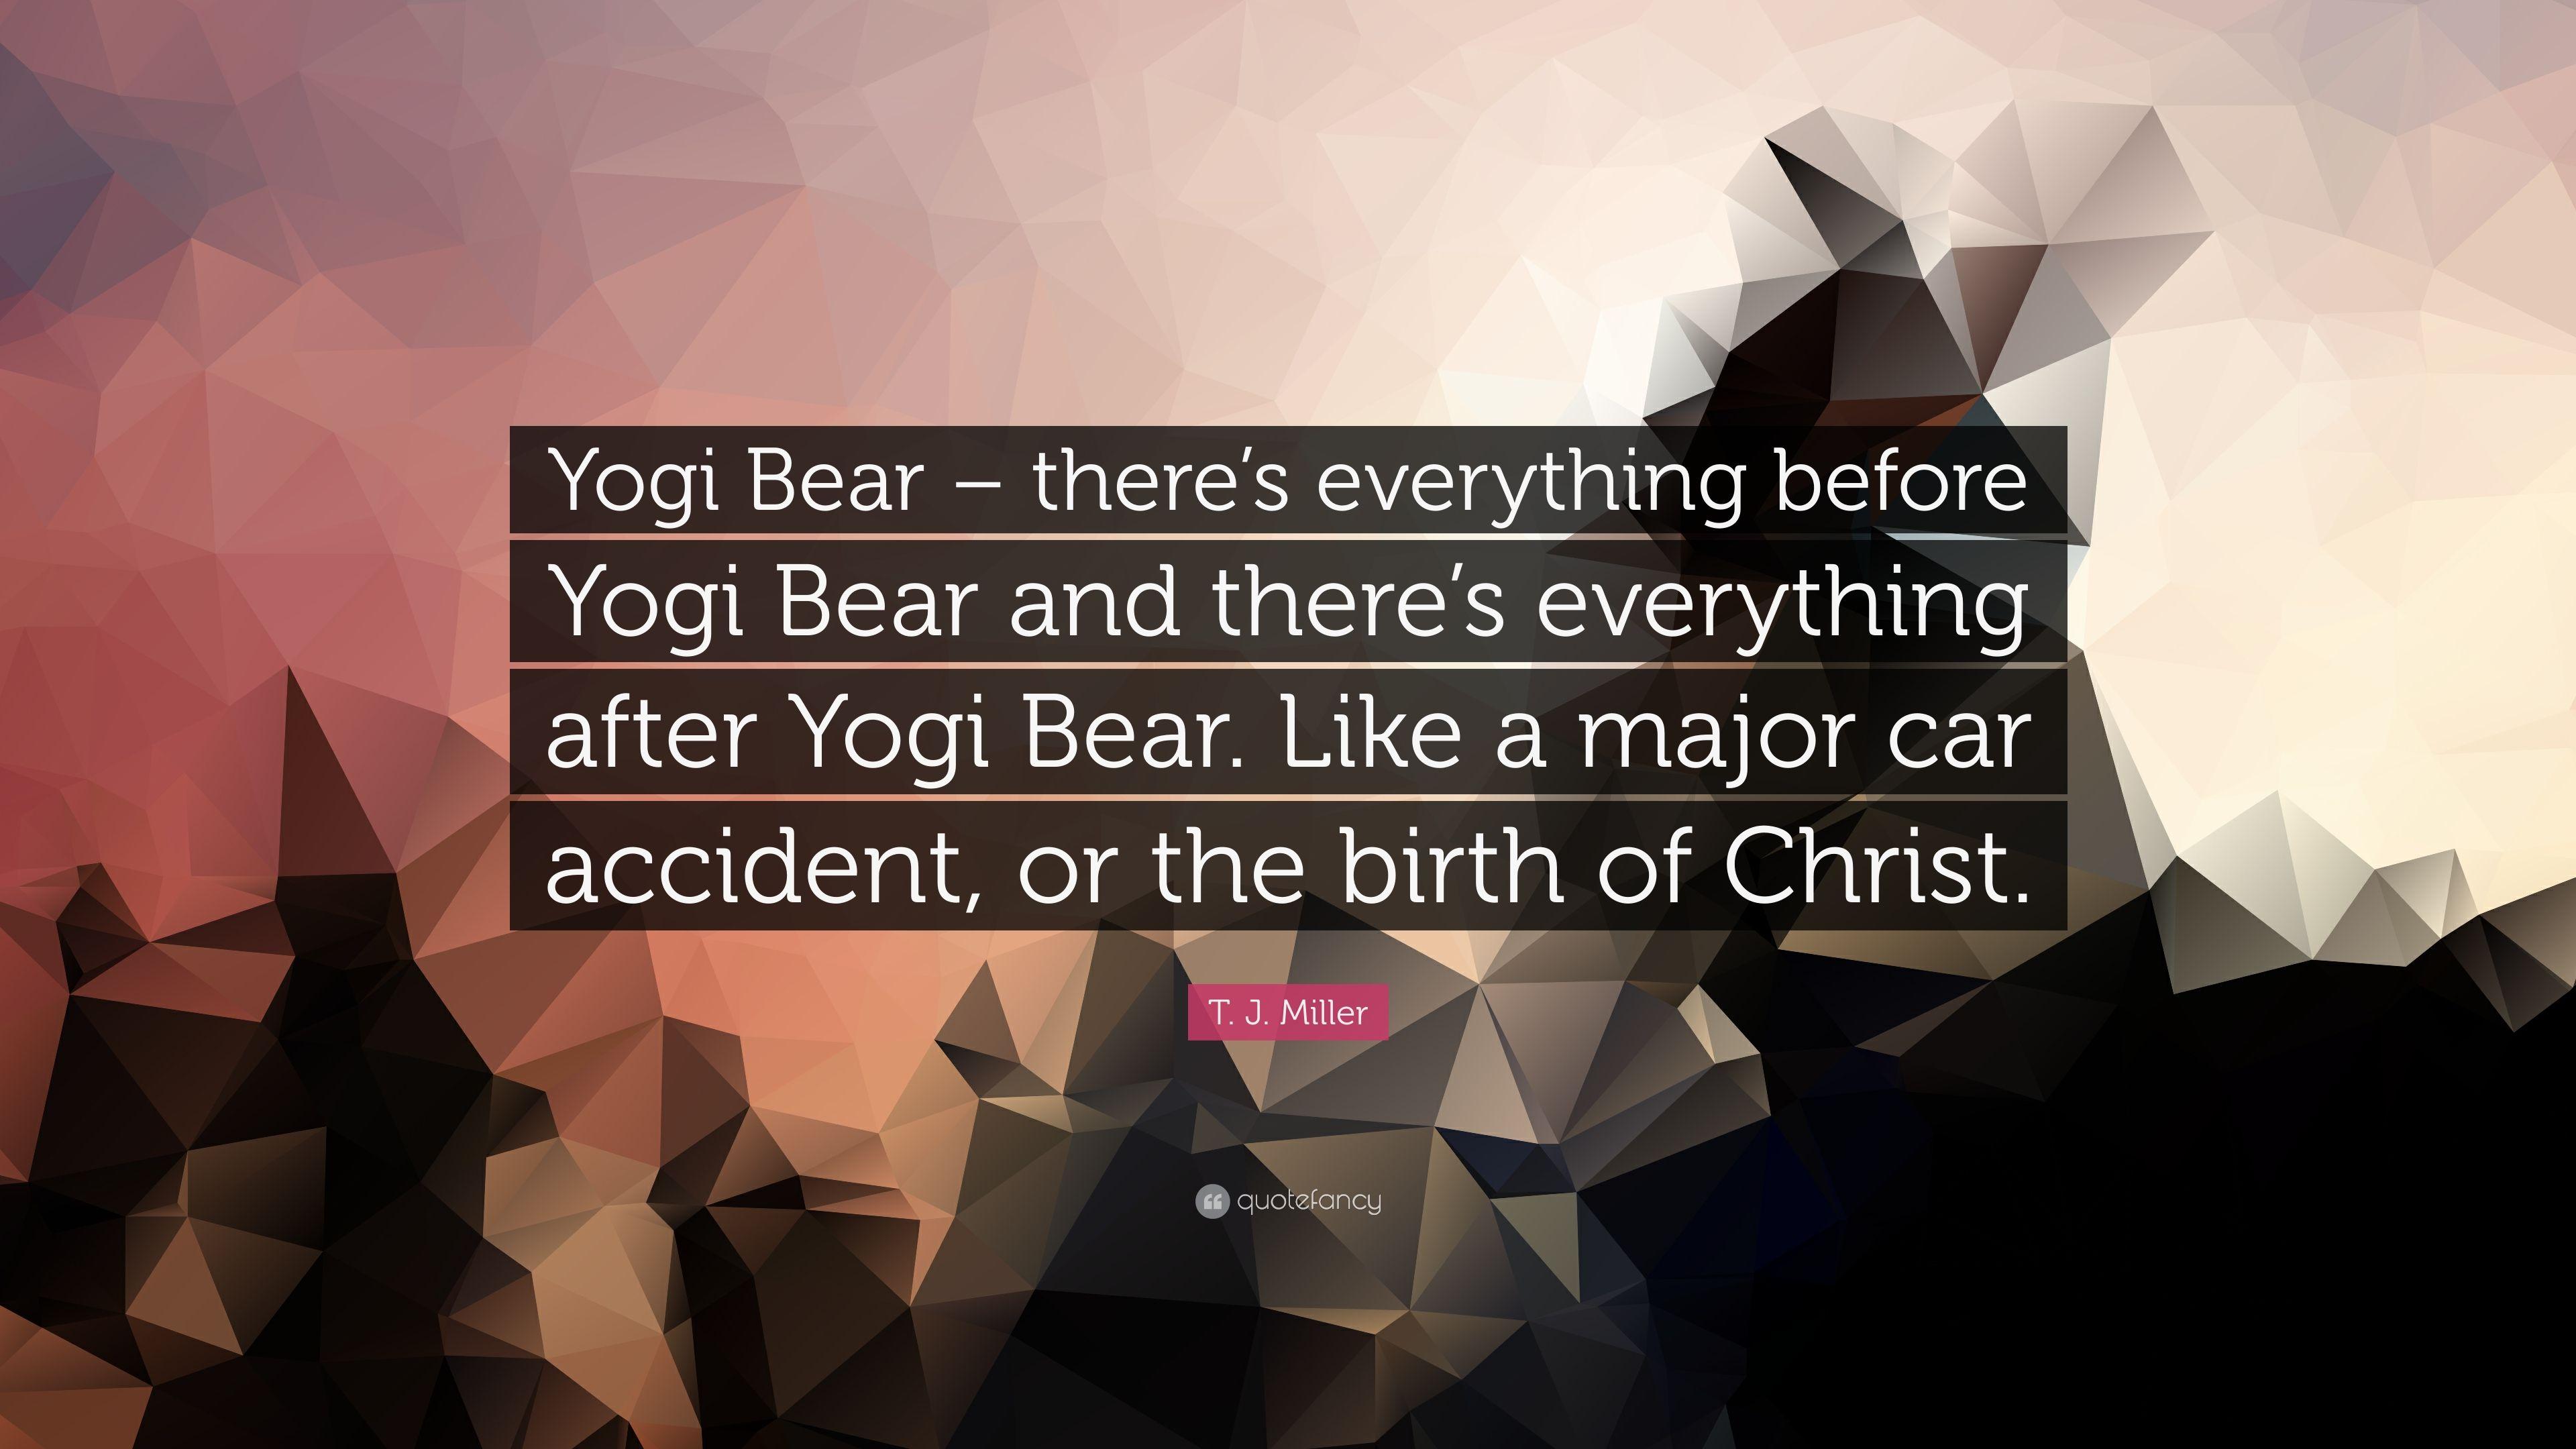 T. J. Miller Quote: “Yogi Bear